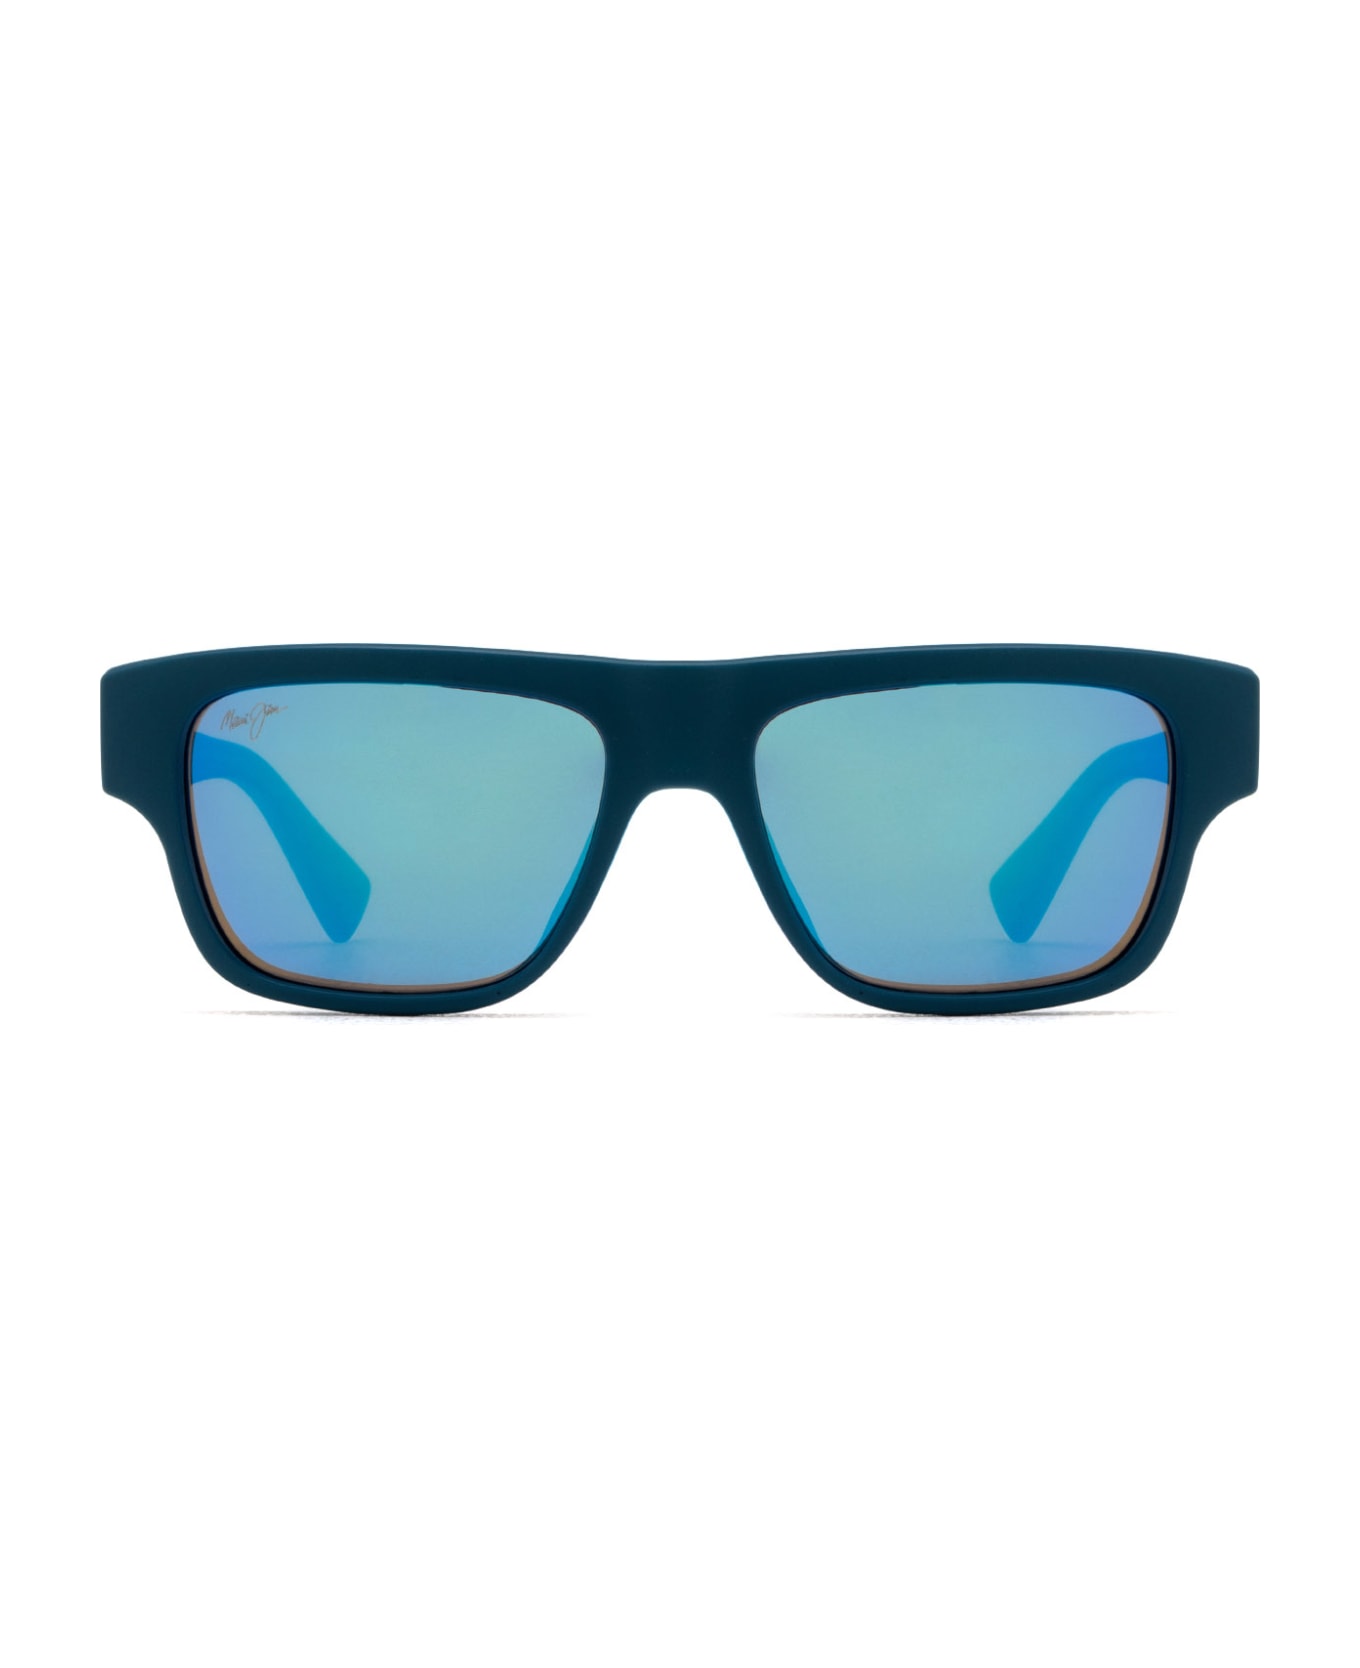 Maui Jim Mj638 Matte Petrol Blue Sunglasses - Matte Petrol Blue サングラス